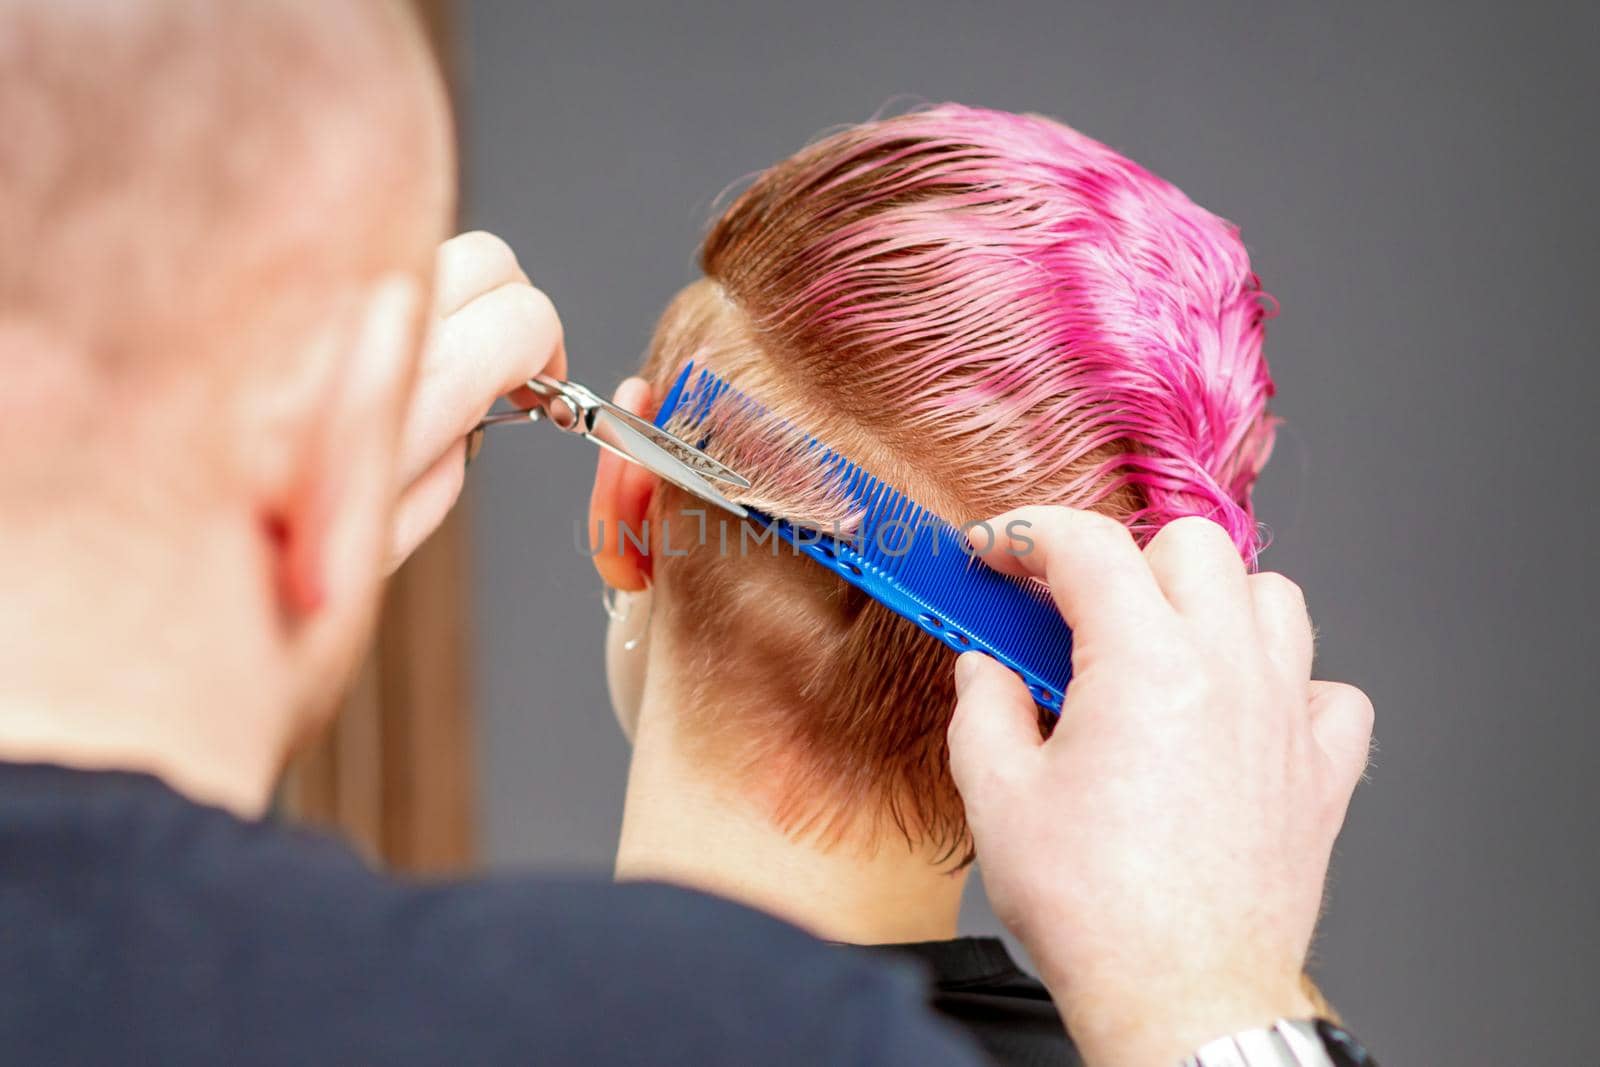 Woman having a new haircut. Male hairstylist cutting pink short hair with scissors in a hair salon